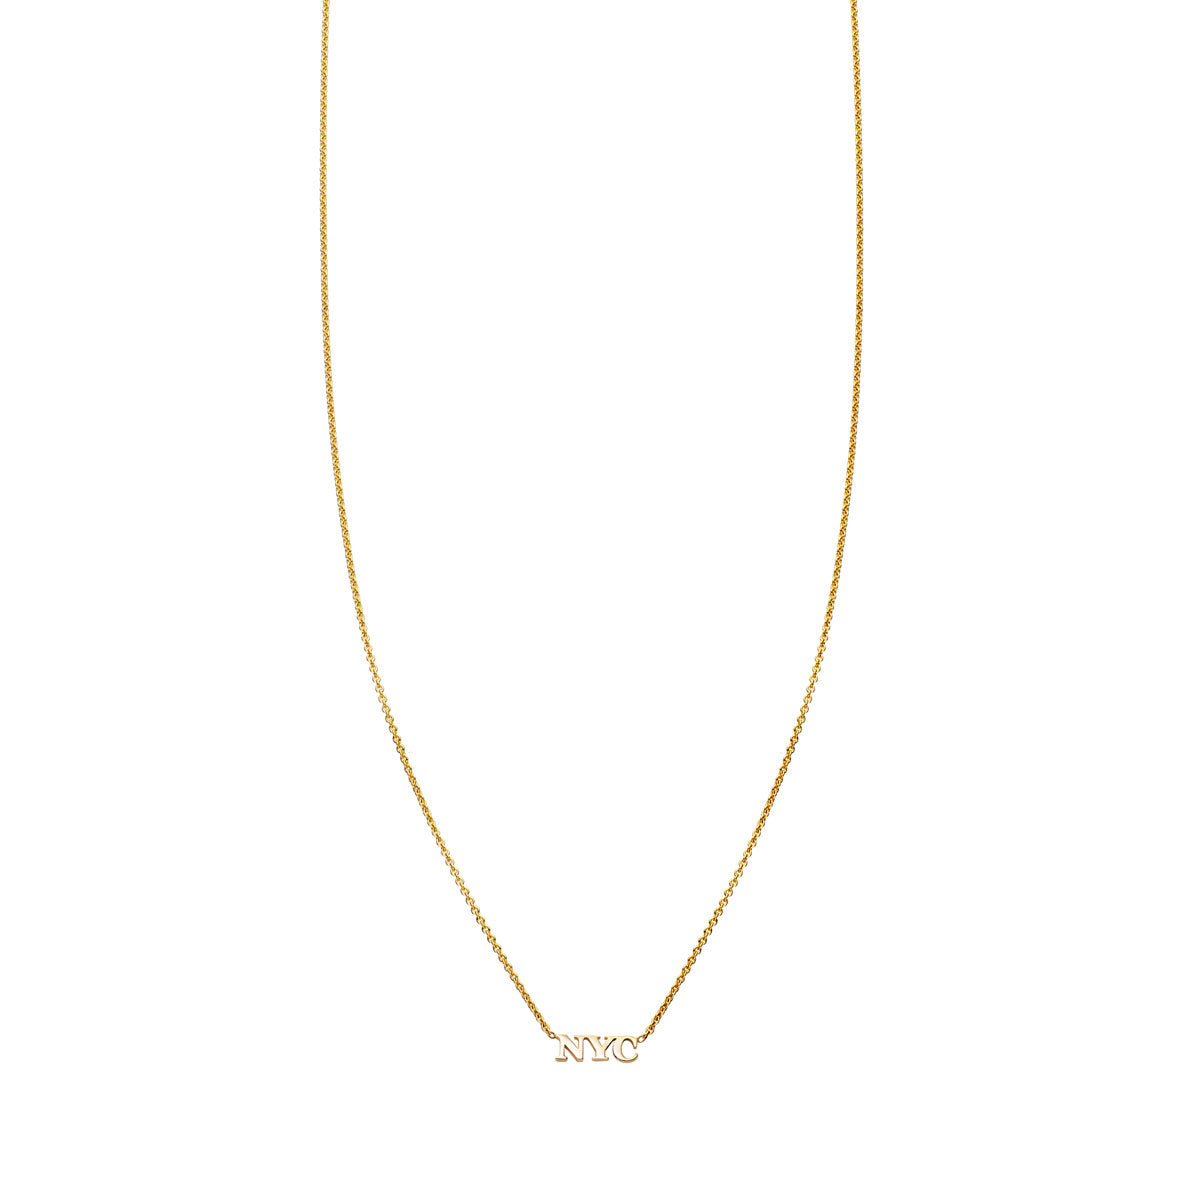 gold nyc necklace PRN 509 14KY